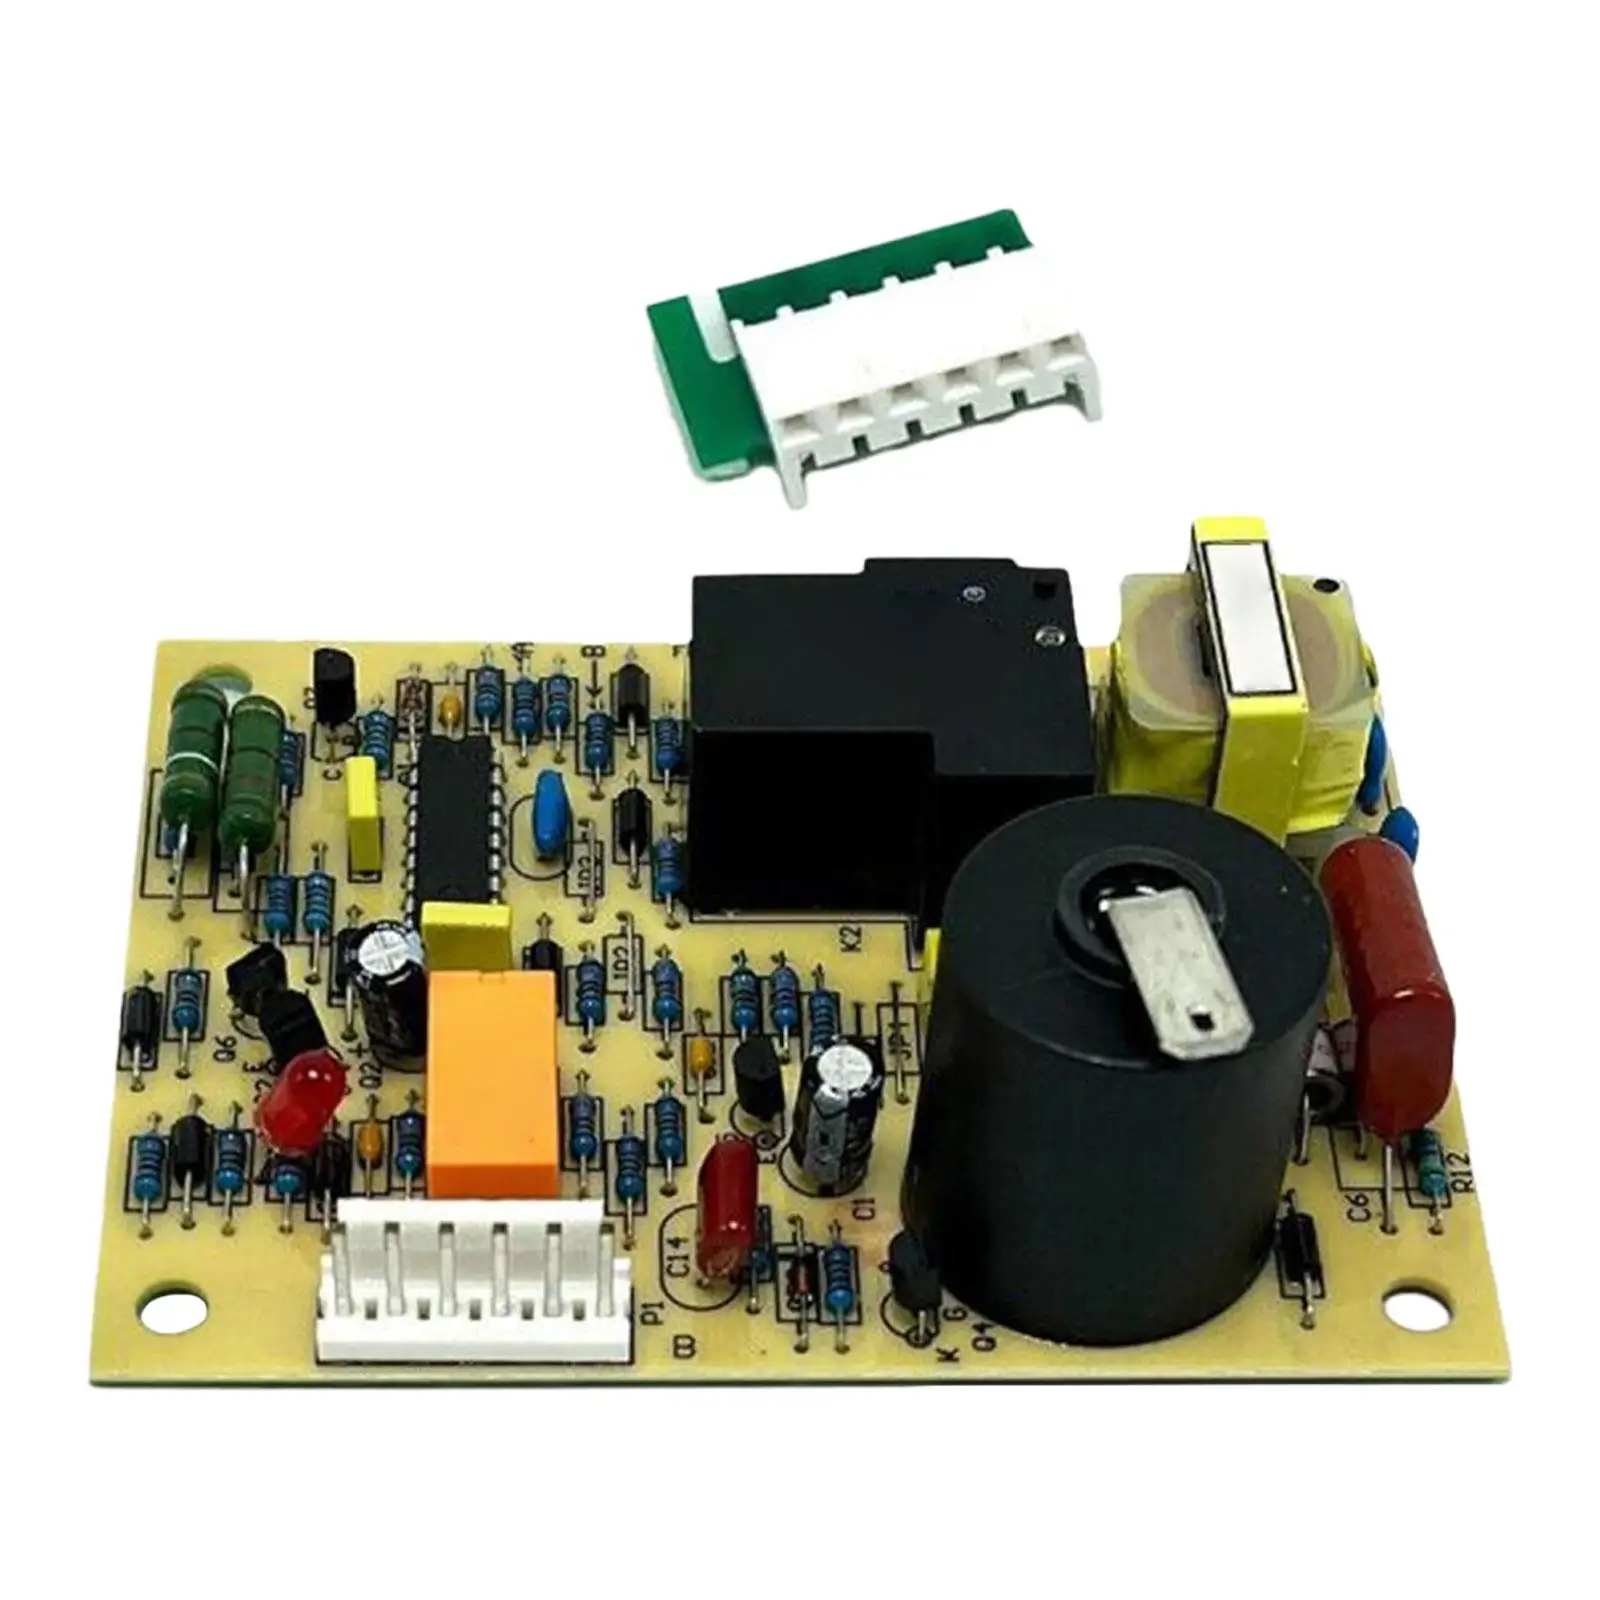 31501 Ignition Control Circuit Board for 7912-ii 8900-iii DC Series